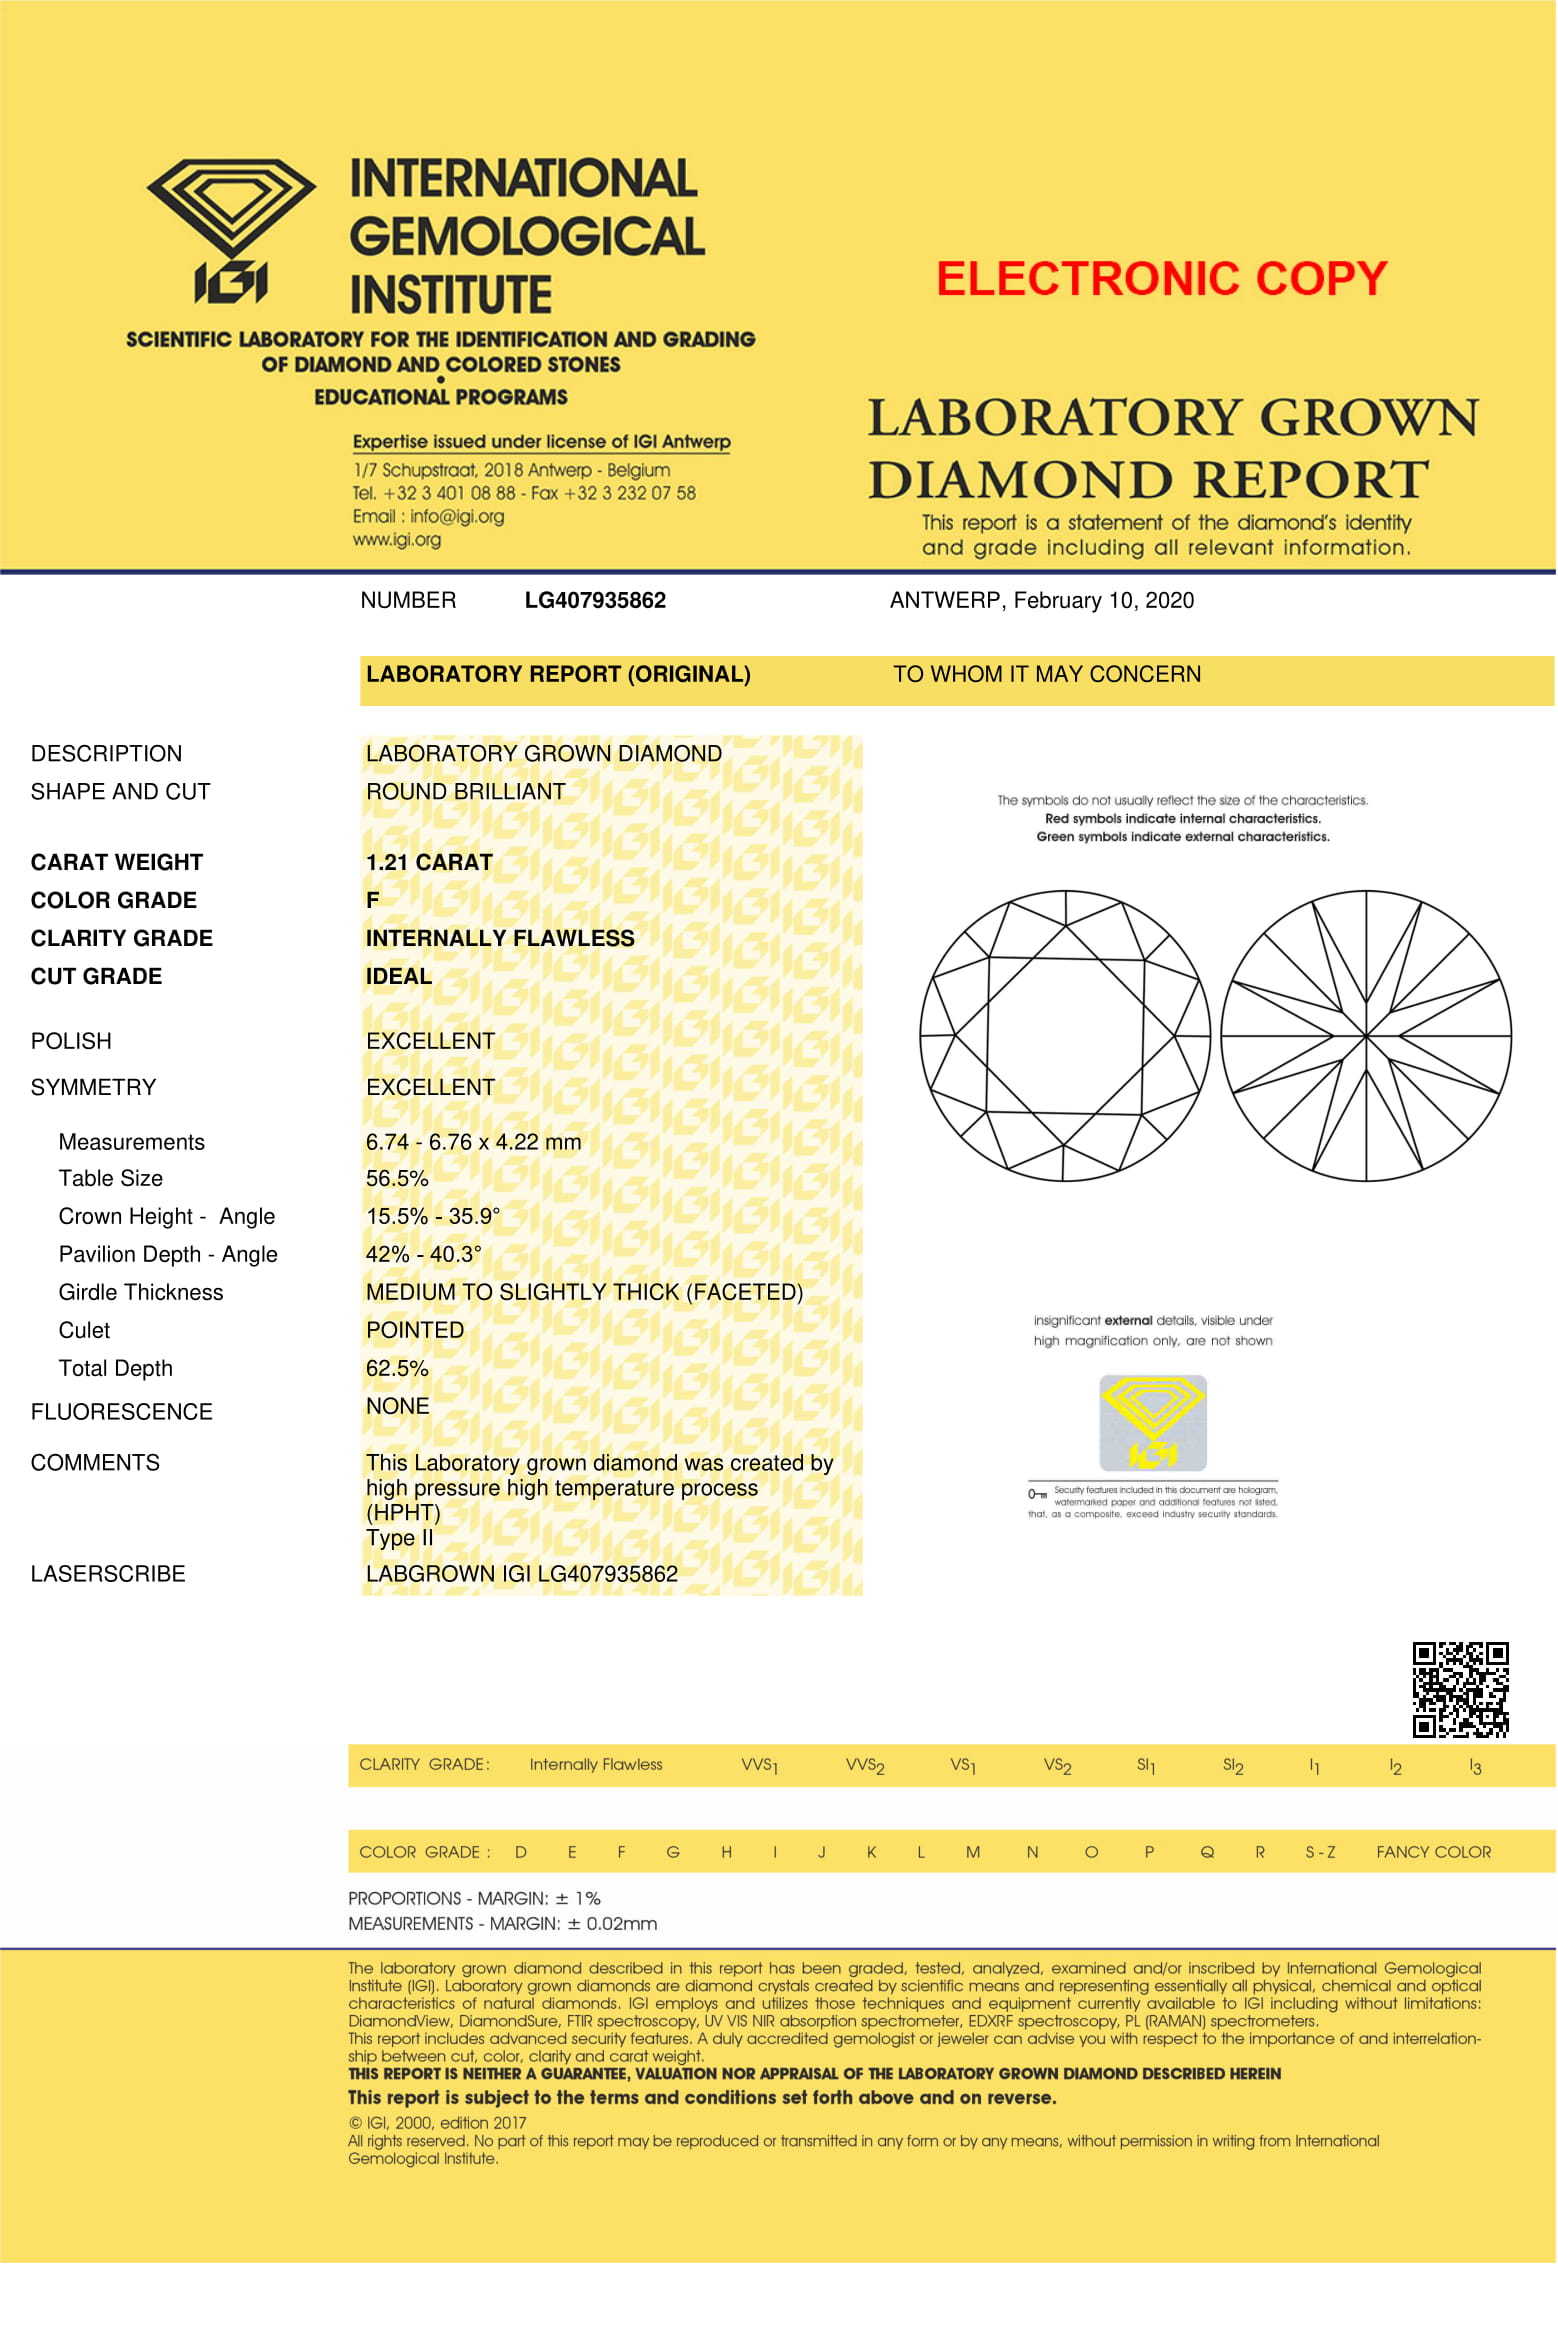 Round 1.21ct Lab Grown Diamond CVD F IGI Certified Stone - EC969